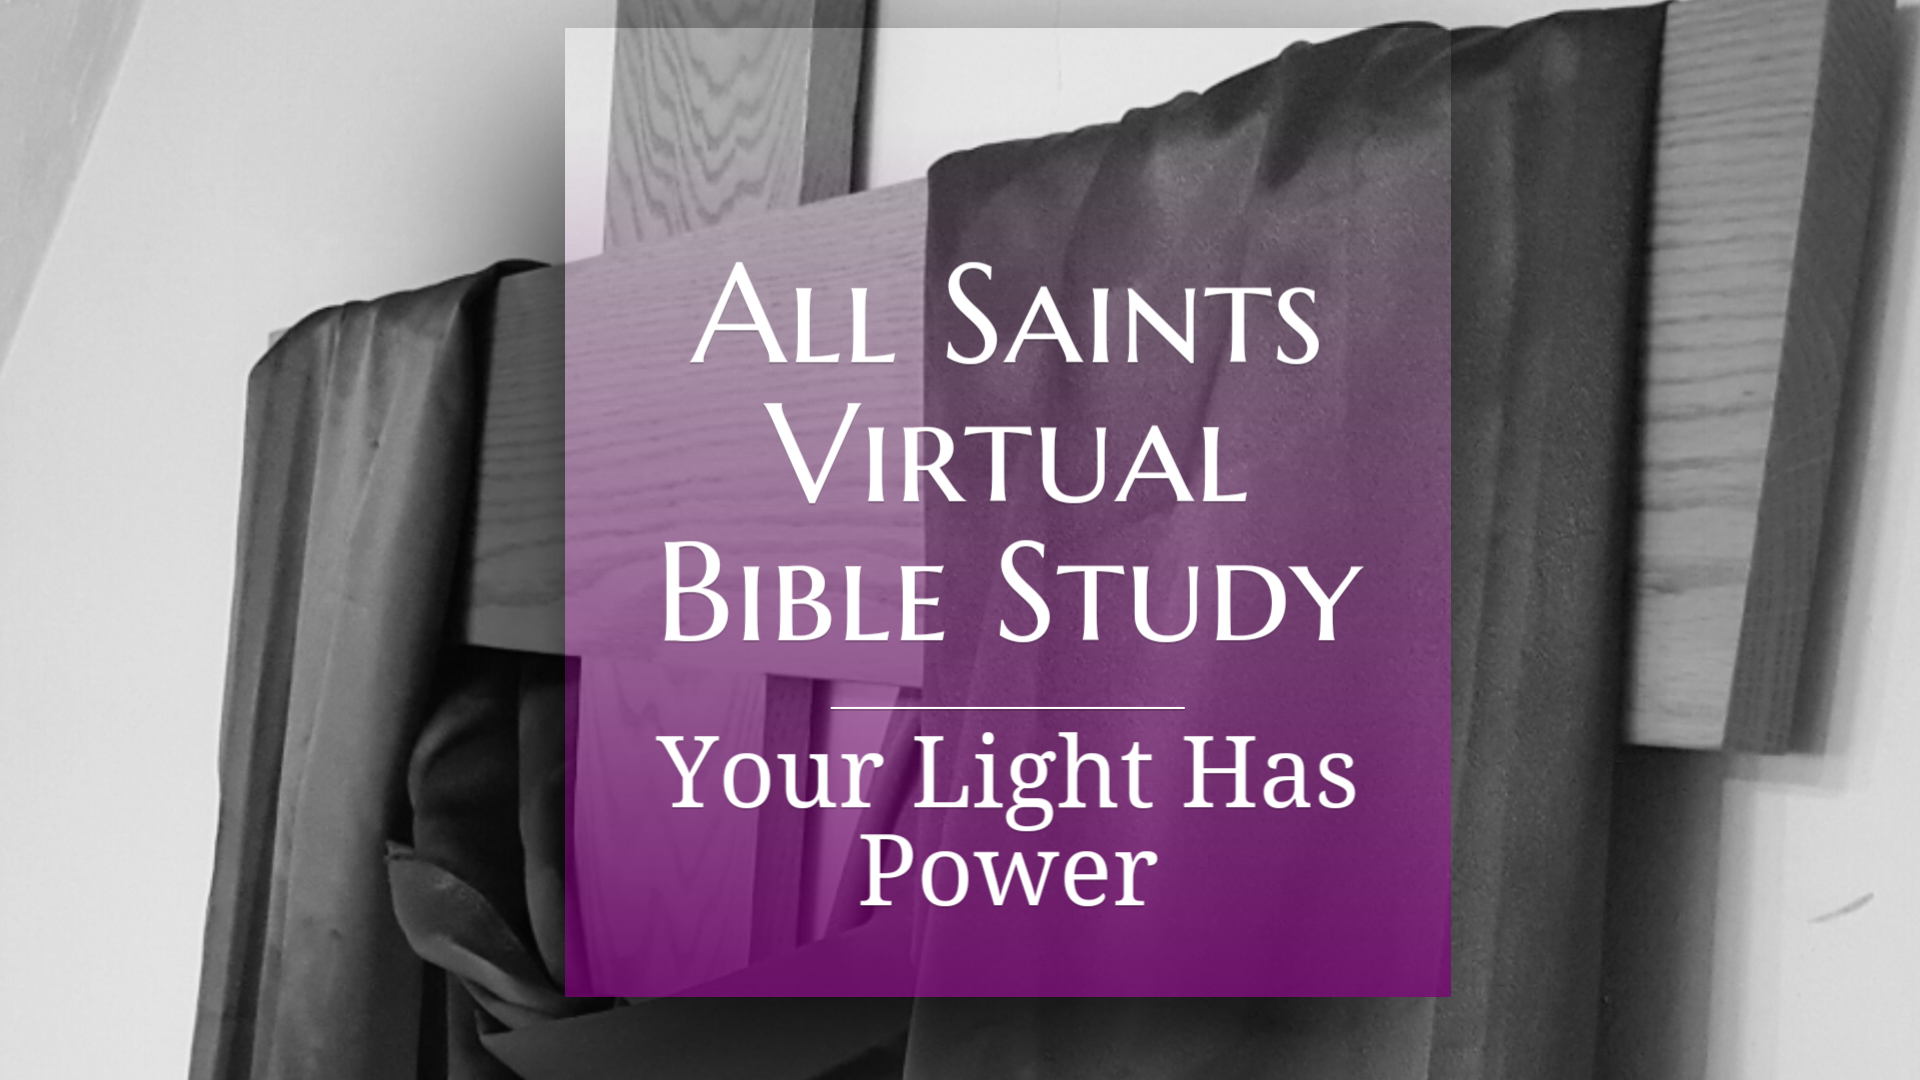 All Saints Virtual Bible Study - Your Light Has Power